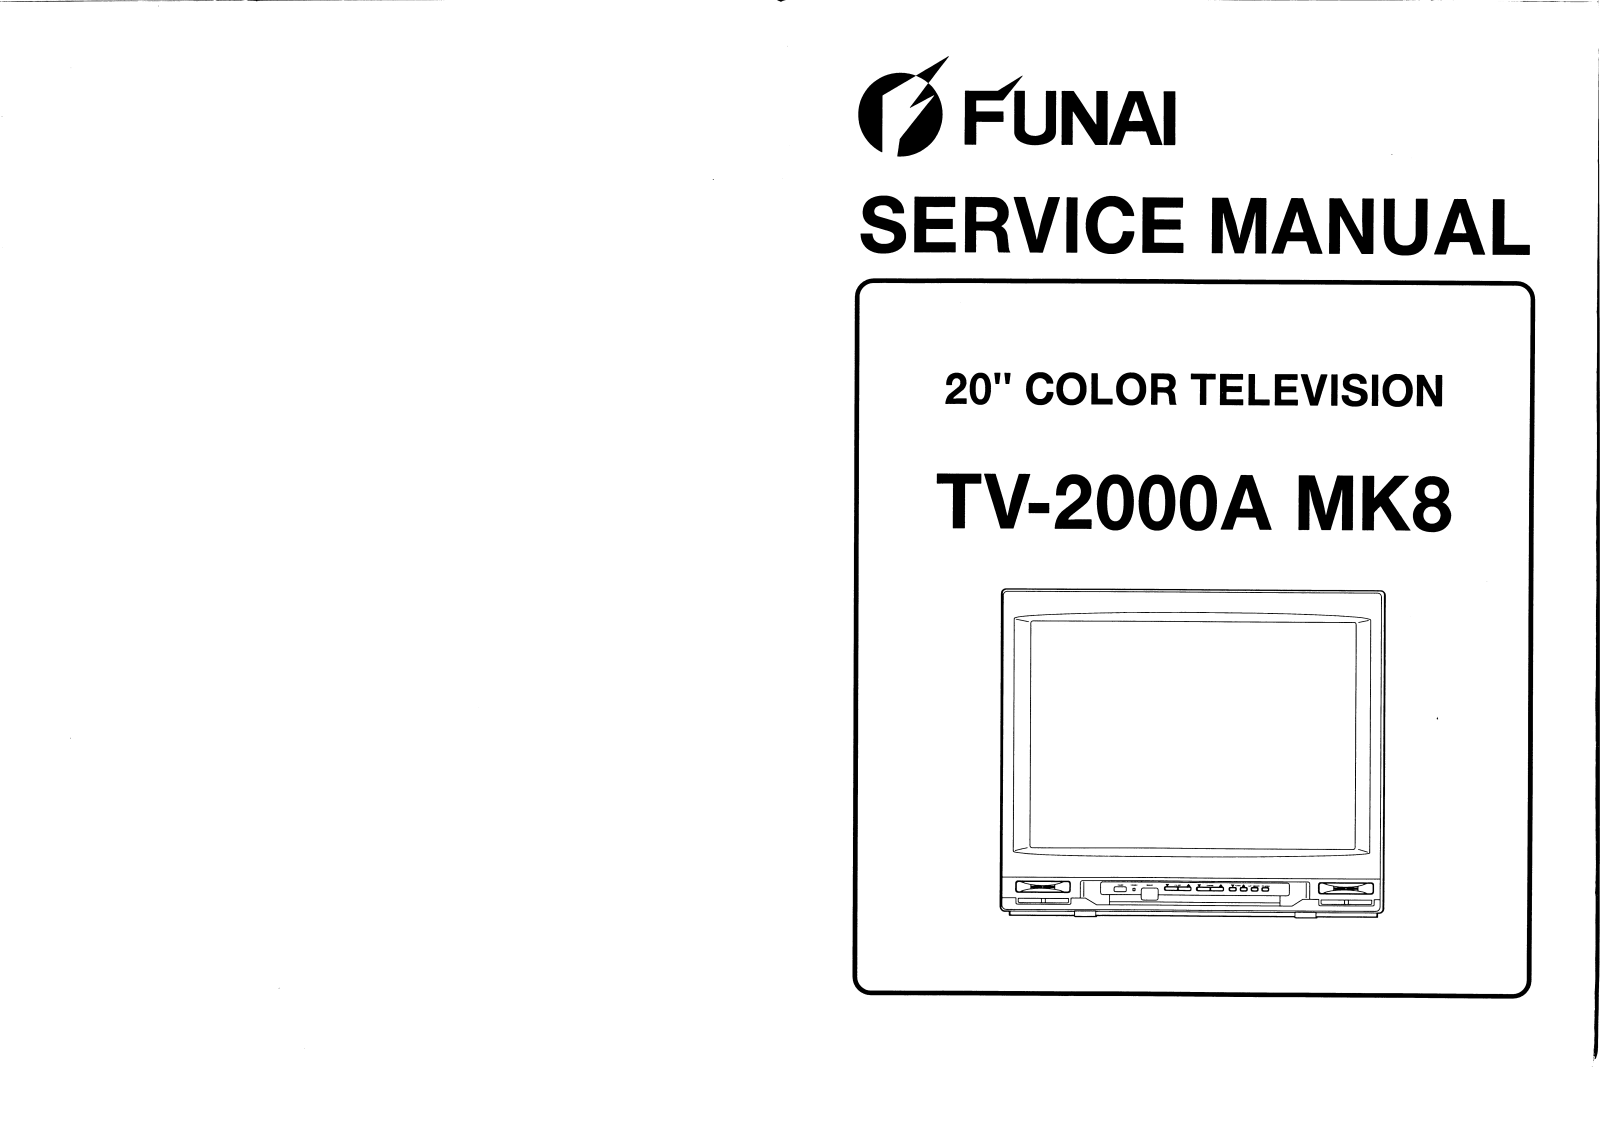 Funai TV-2000A MK8 Service manual